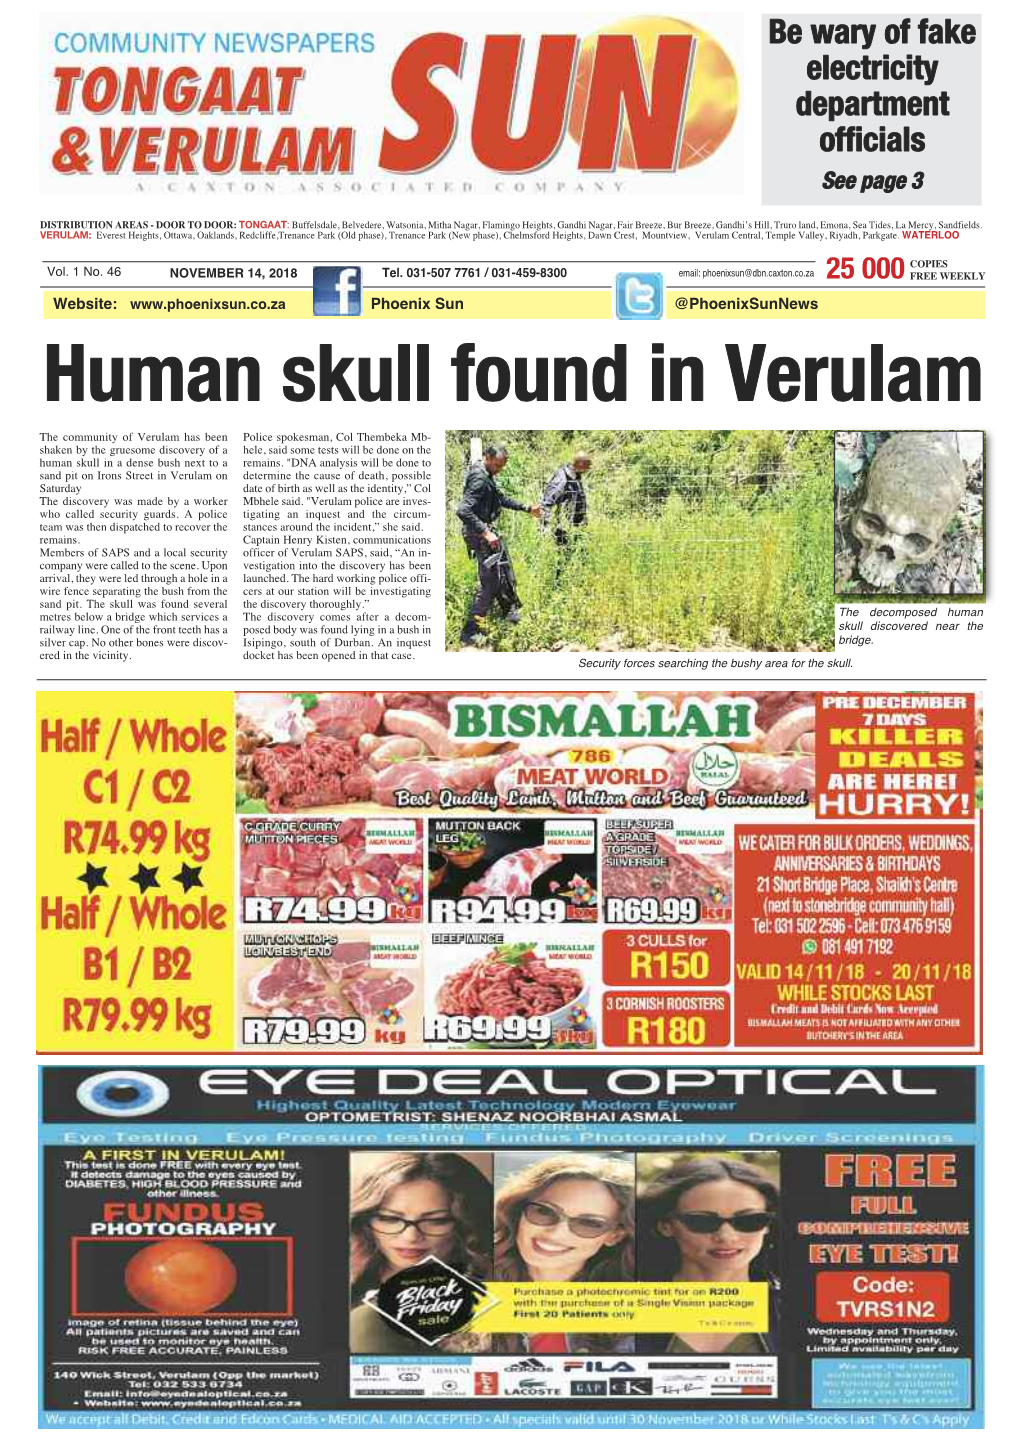 Human Skull Found in Verulam